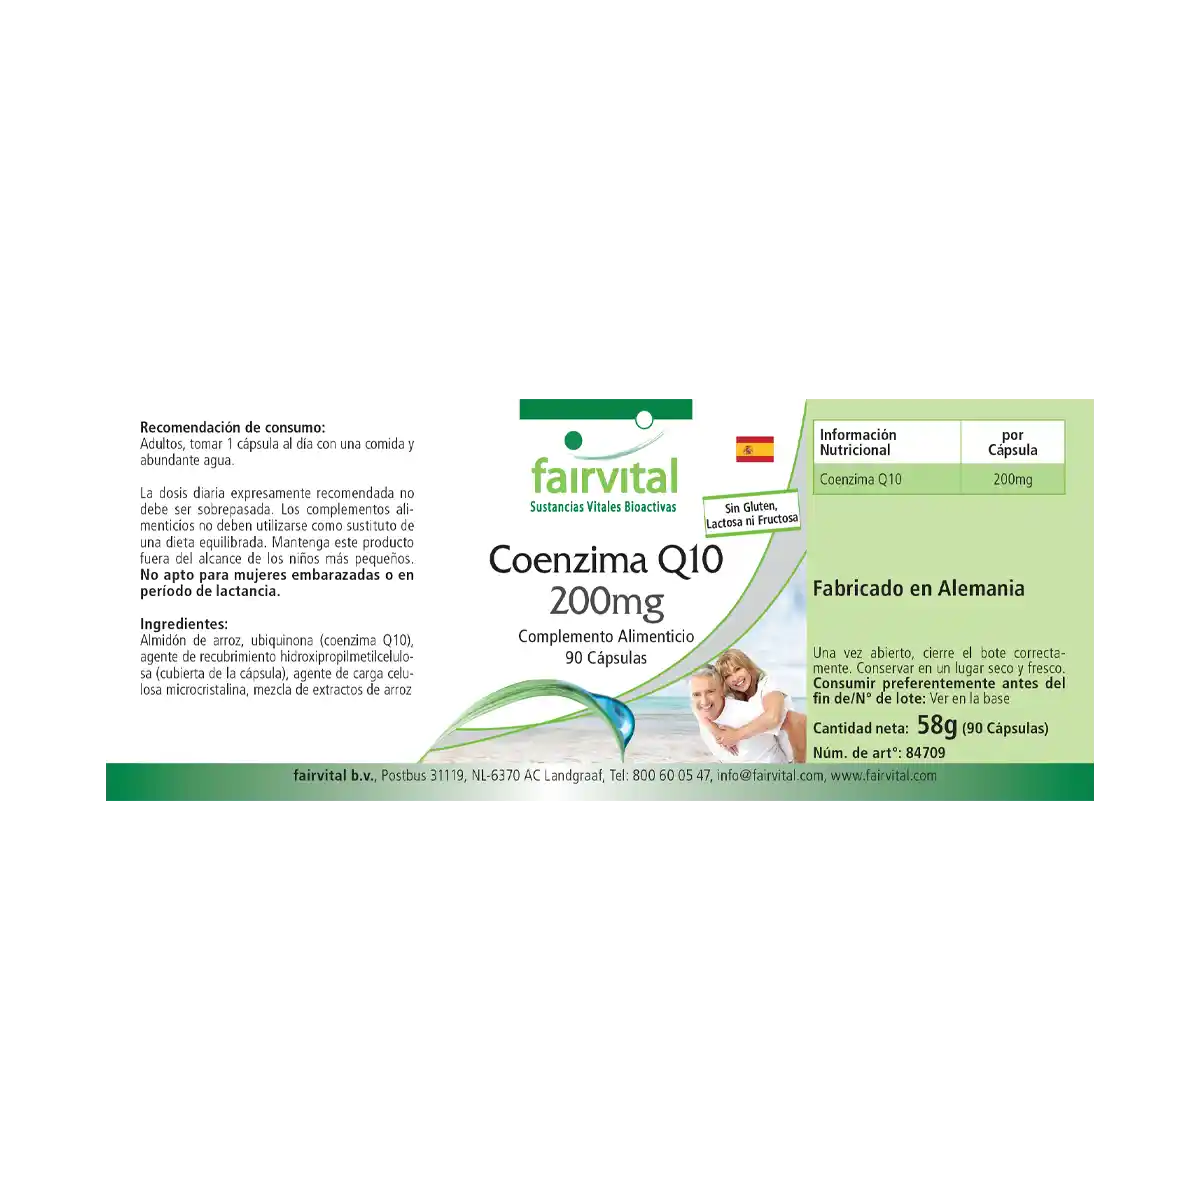 Coenzyme Q10 200mg - 90 capsules